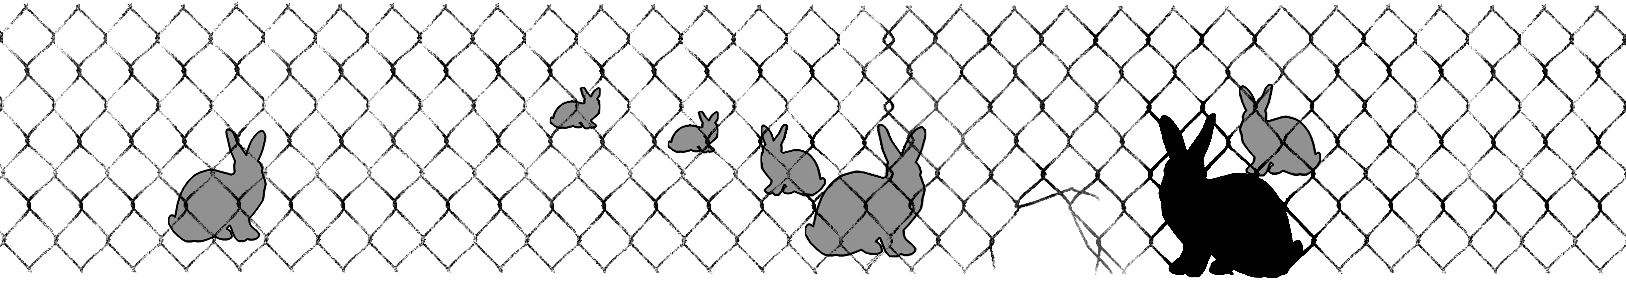 rabbitprooffence_web_06.gif